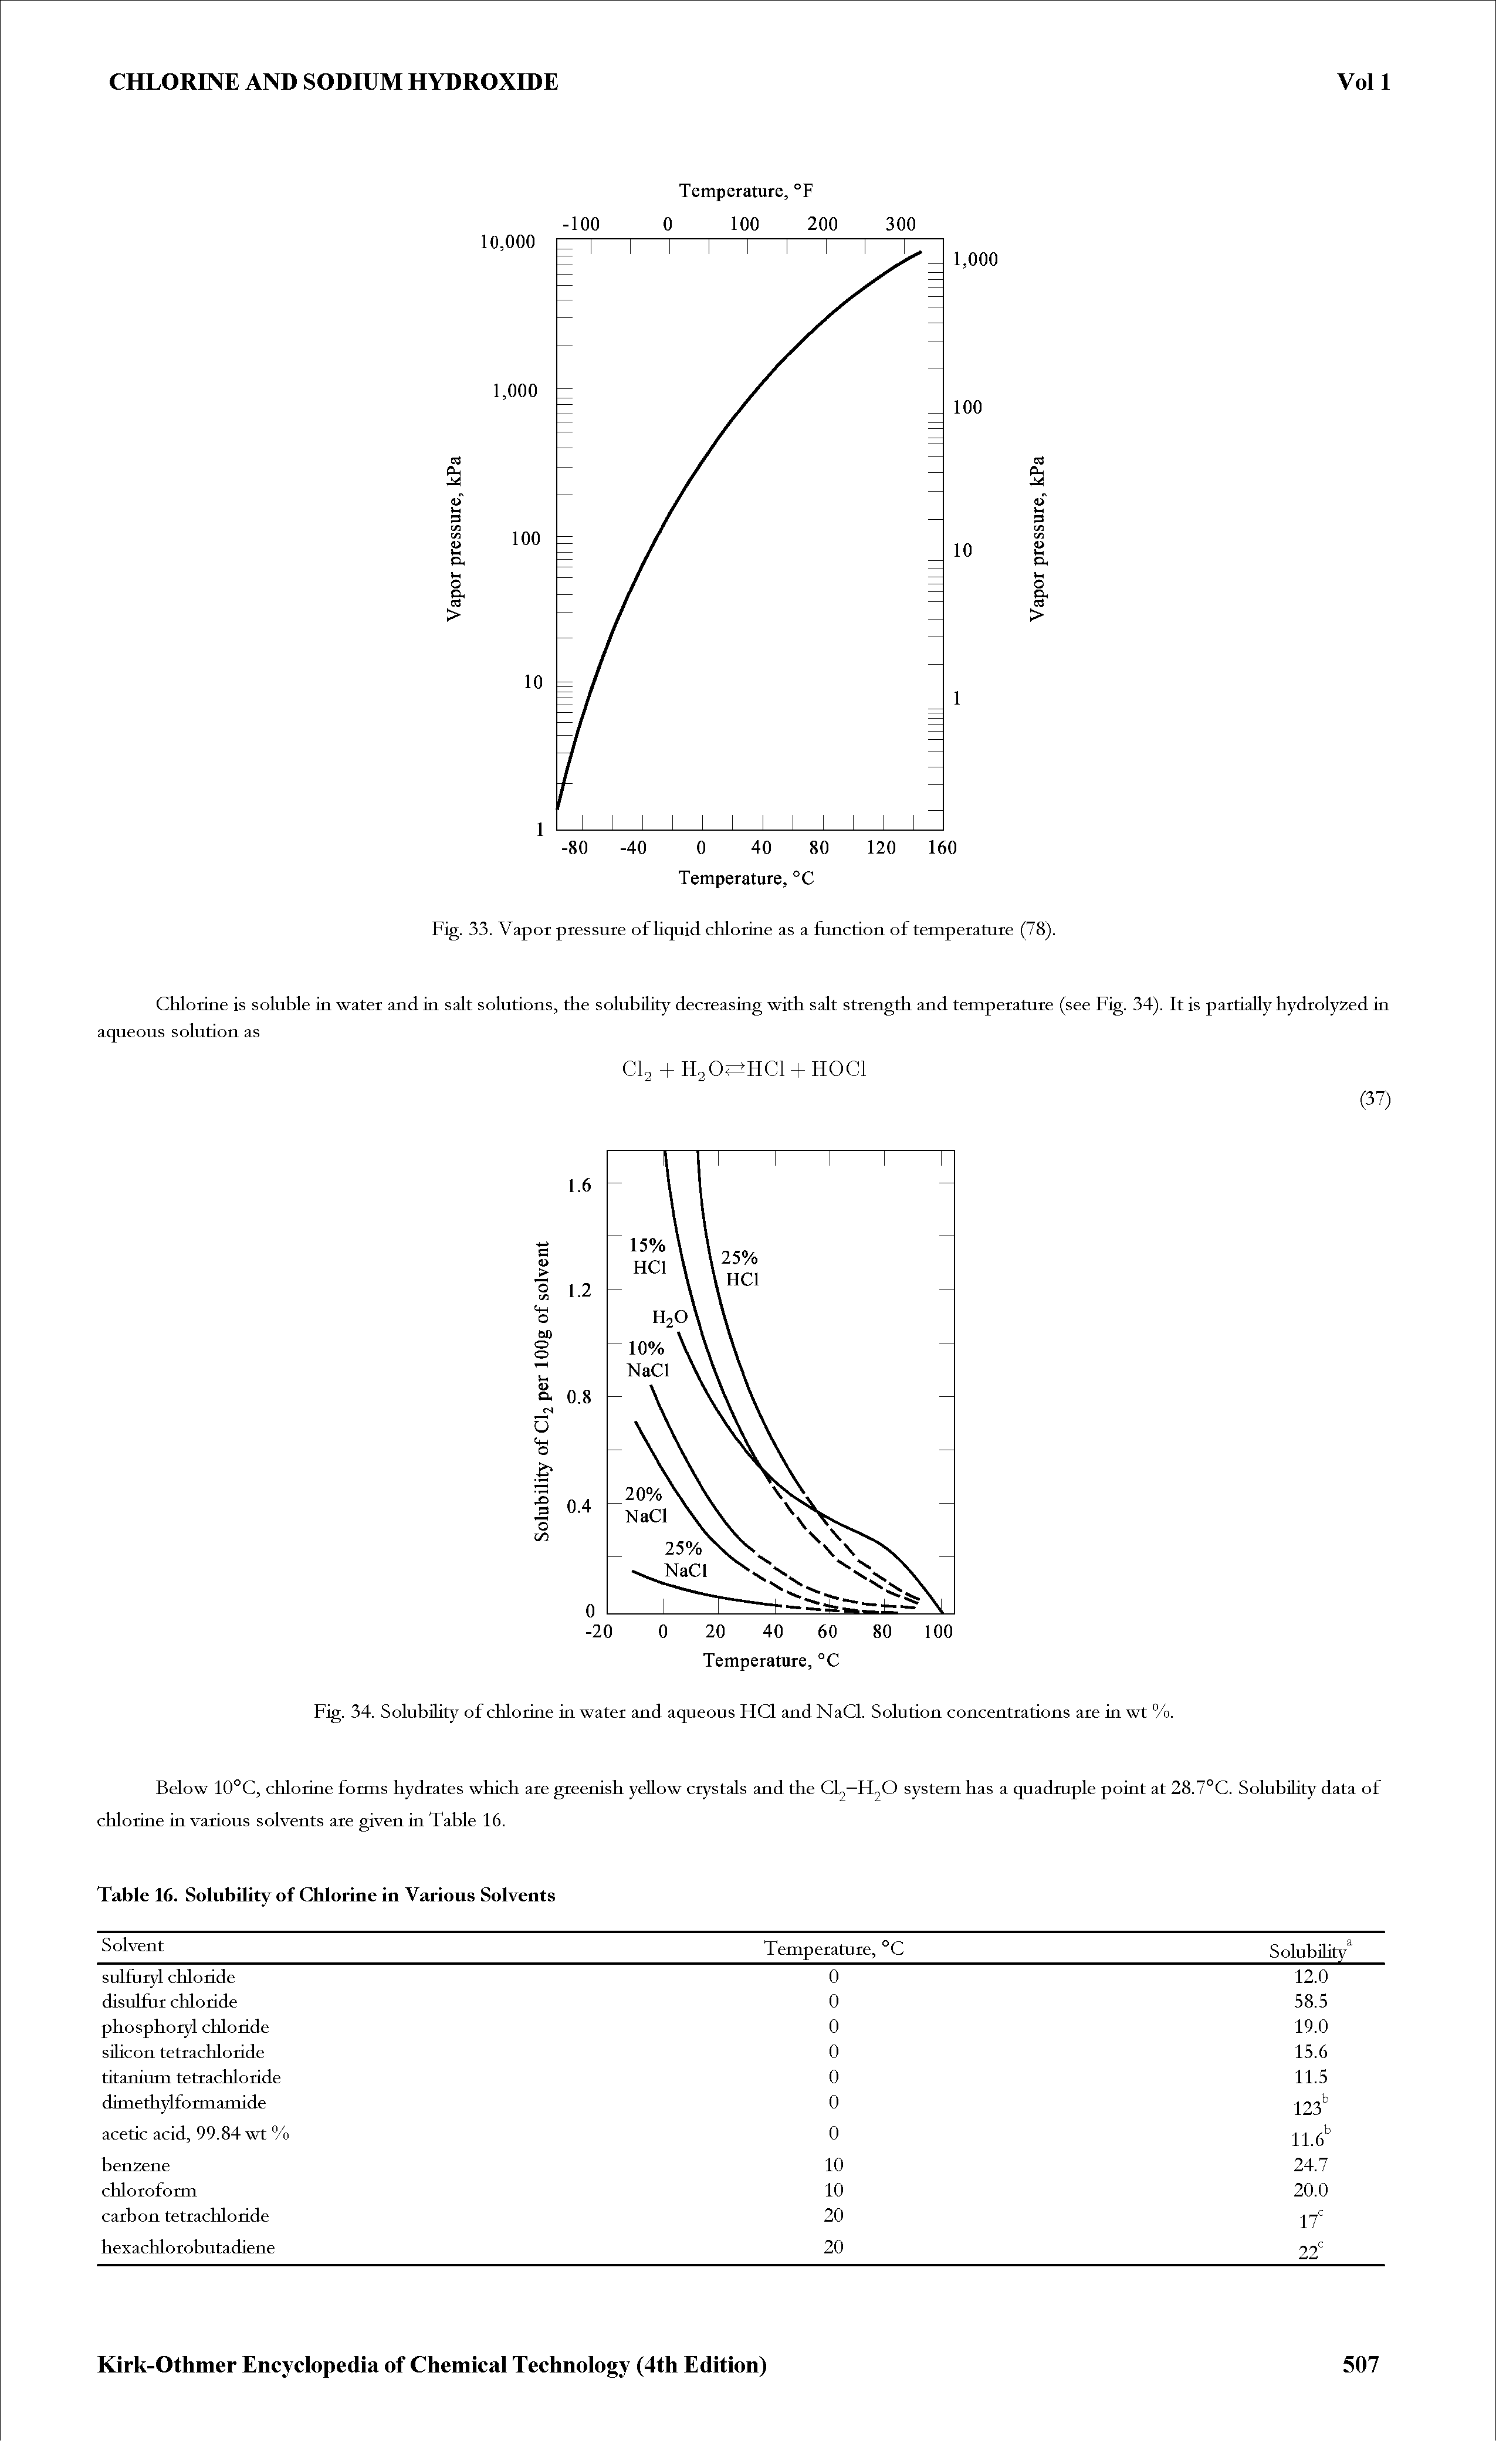 Fig. 33. Vapor pressure of liquid chlorine as a function of temperature (78).